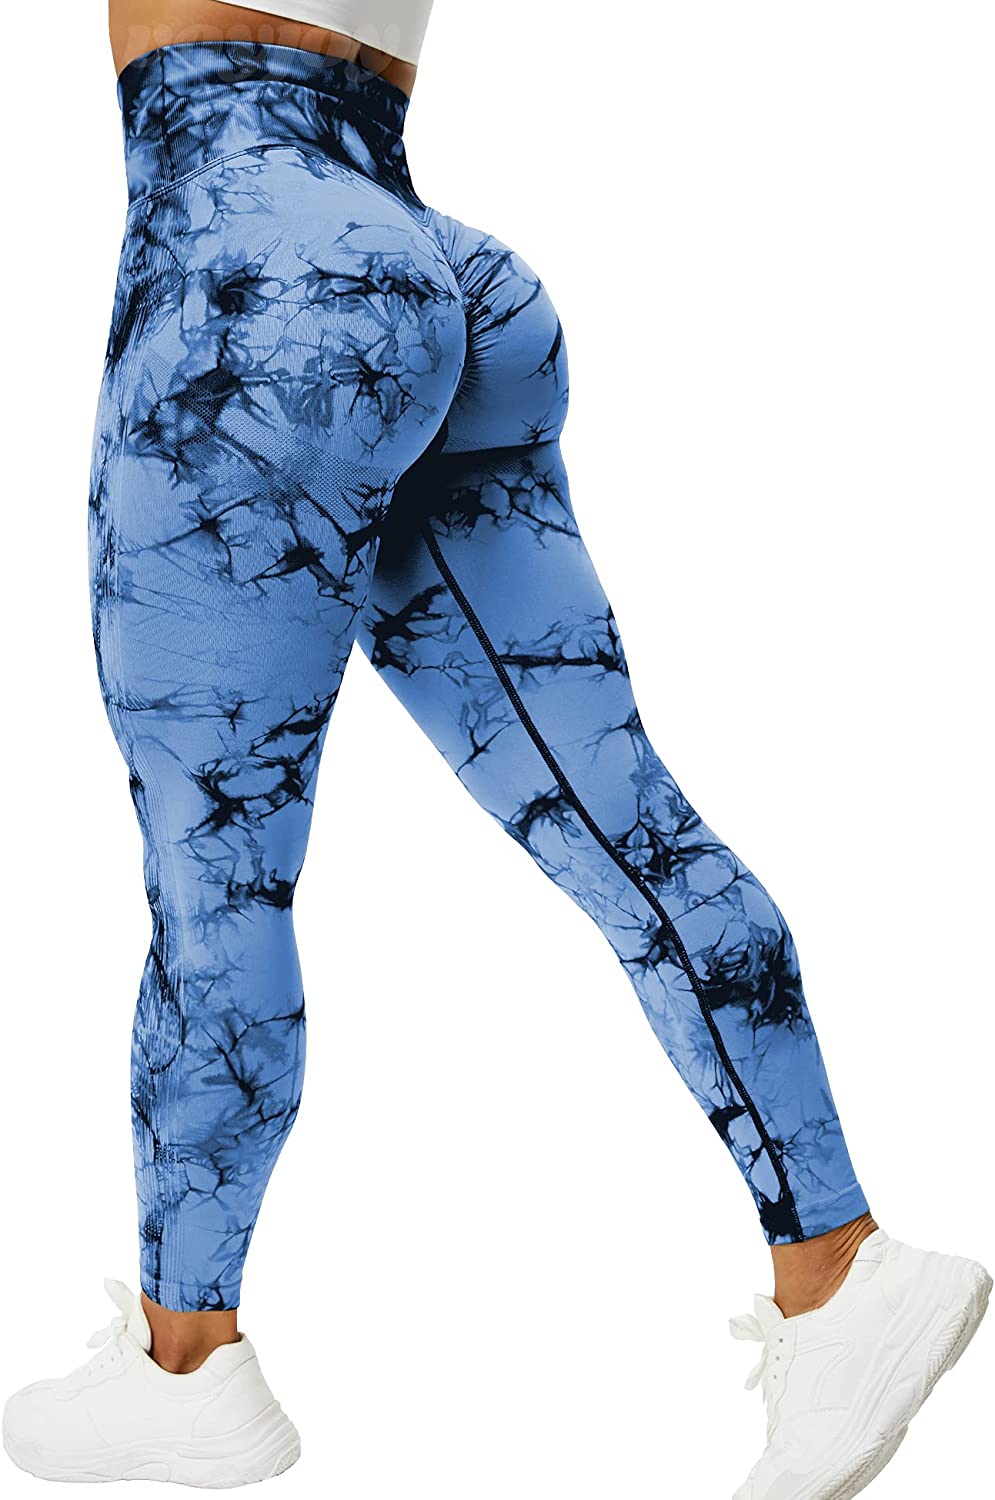 VOYJOY Tie Dye Seamless Leggings for Women High Waist Yoga